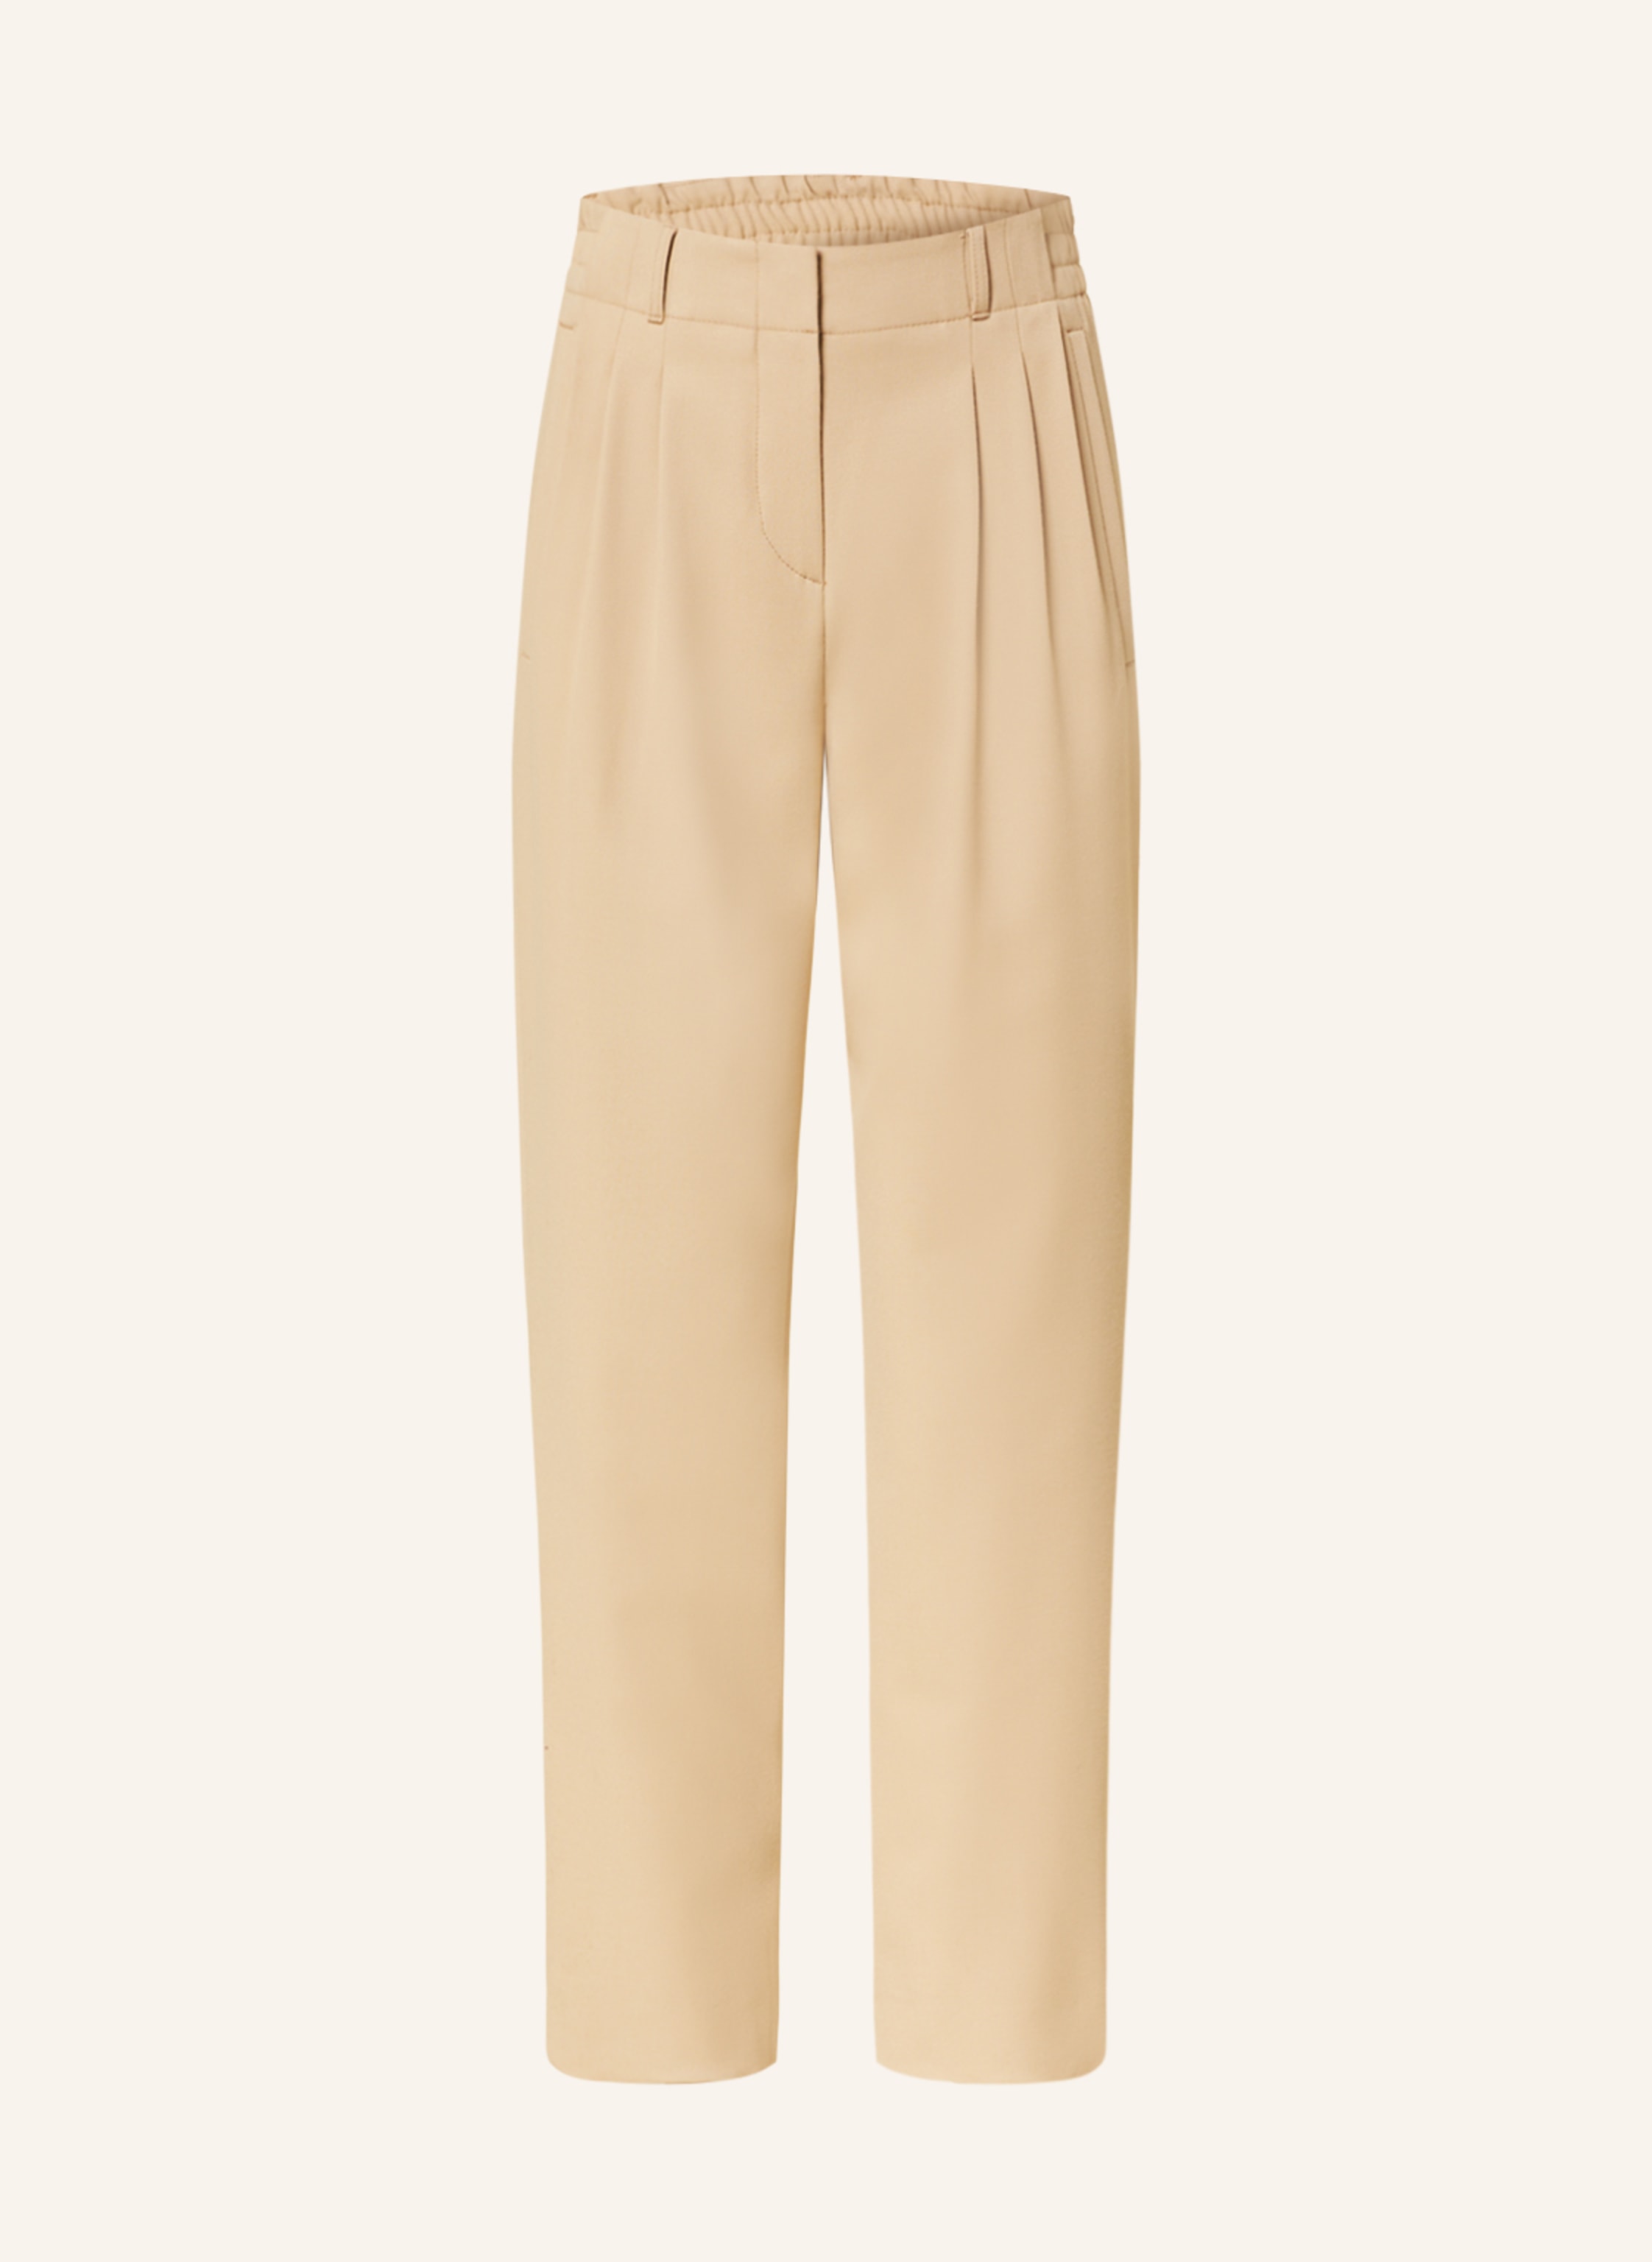 Leather trousers in beige - in the JOOP! Online Shop